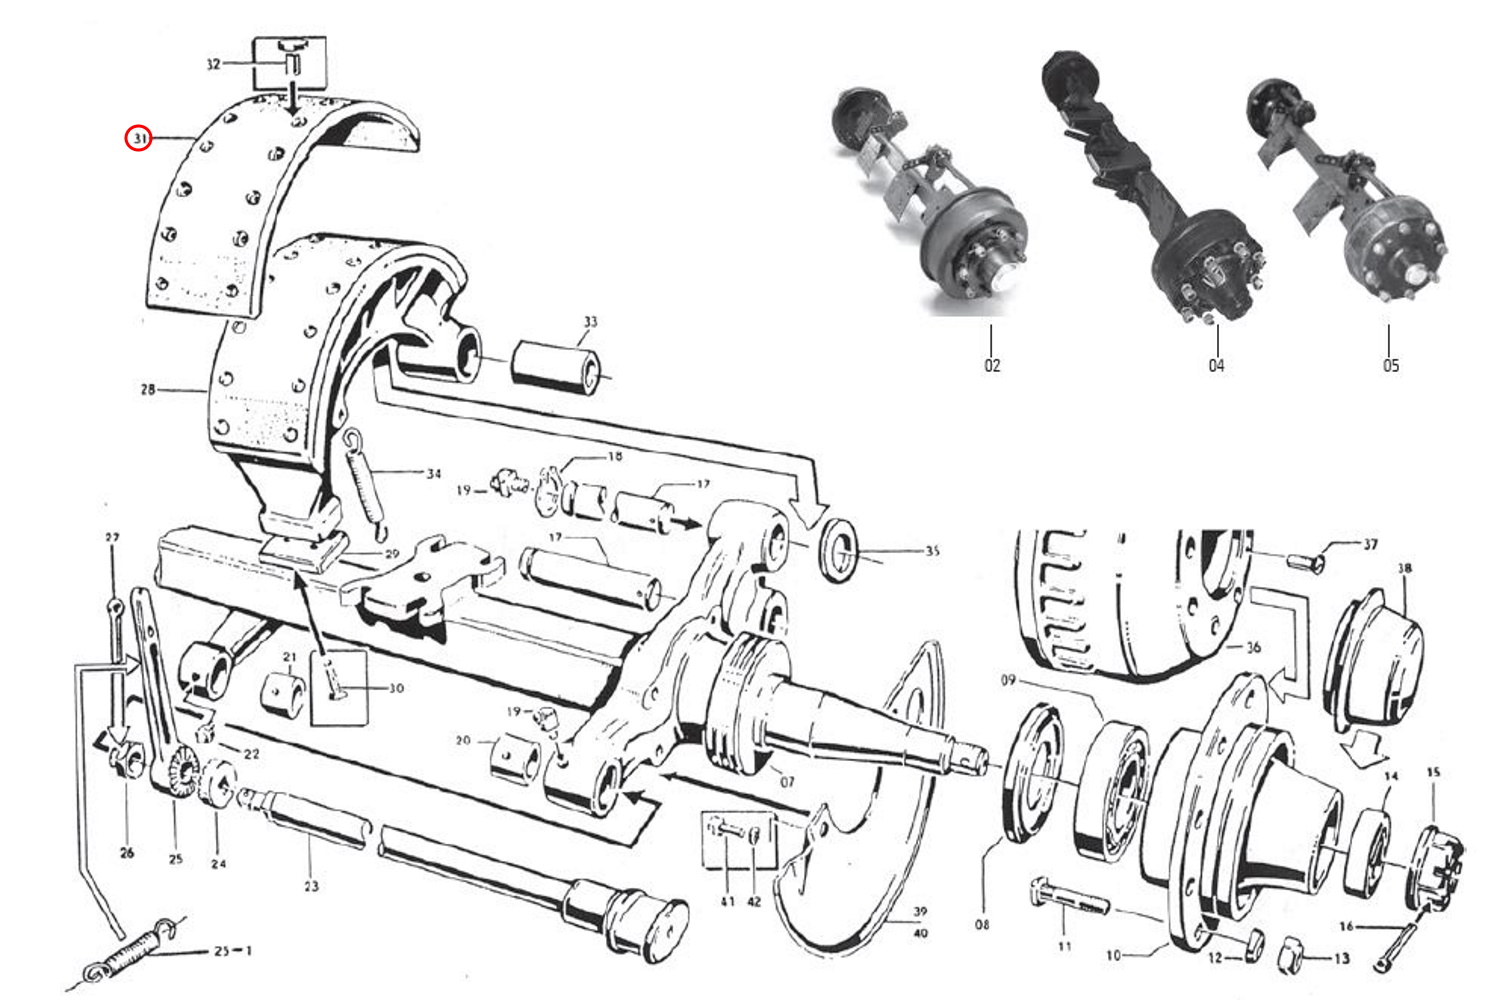 Bremsbeläge 140x10 (4 Stück) | HW60 & HW80 | 14-001-312 - 1